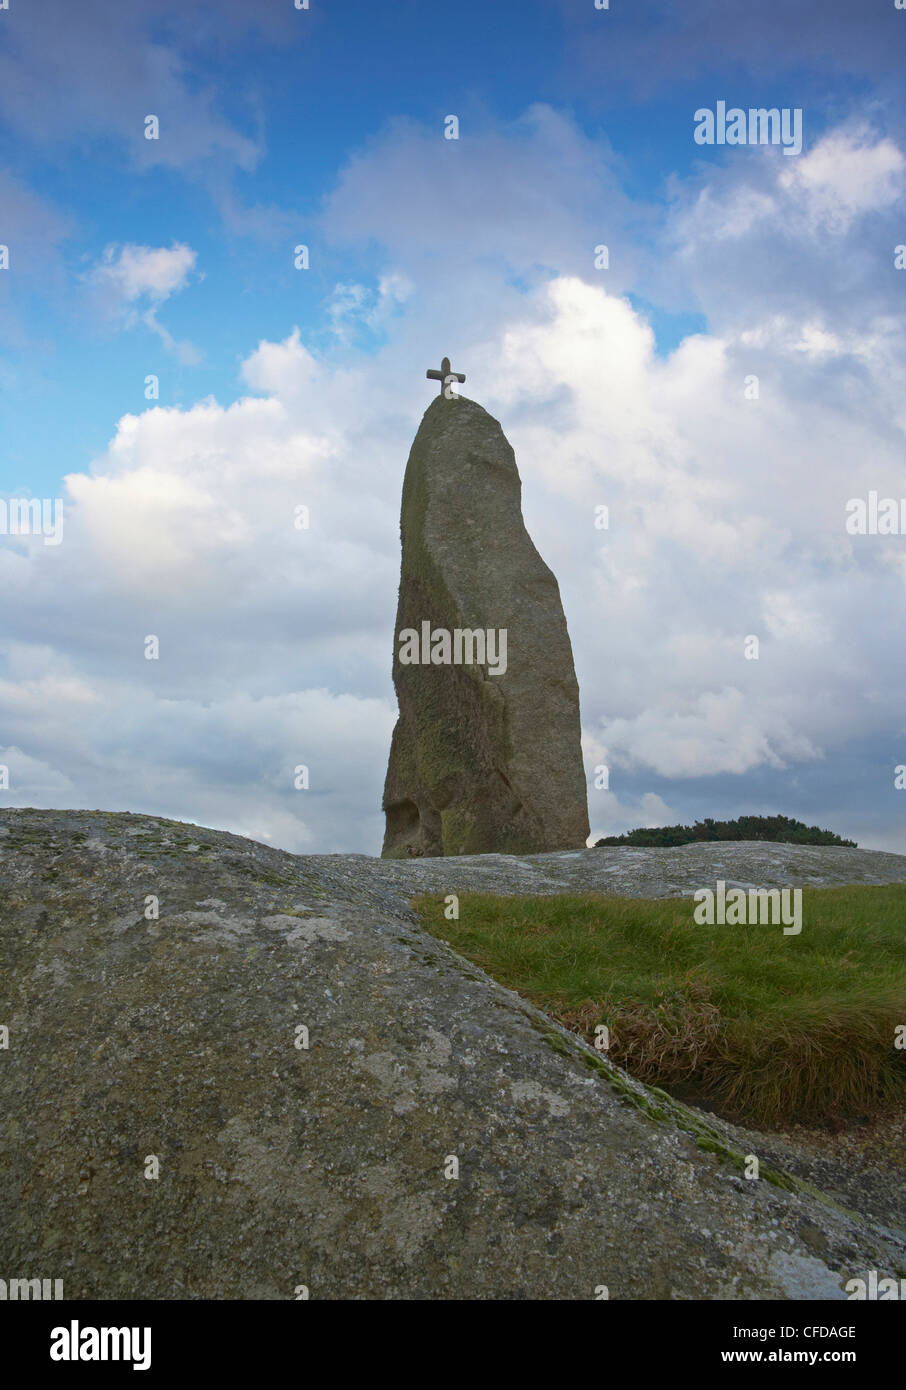 Menhir with cross on top, Menhir de Men Marz, Brignogan Plage, Finistere, Bretagne, France, Europe Stock Photo